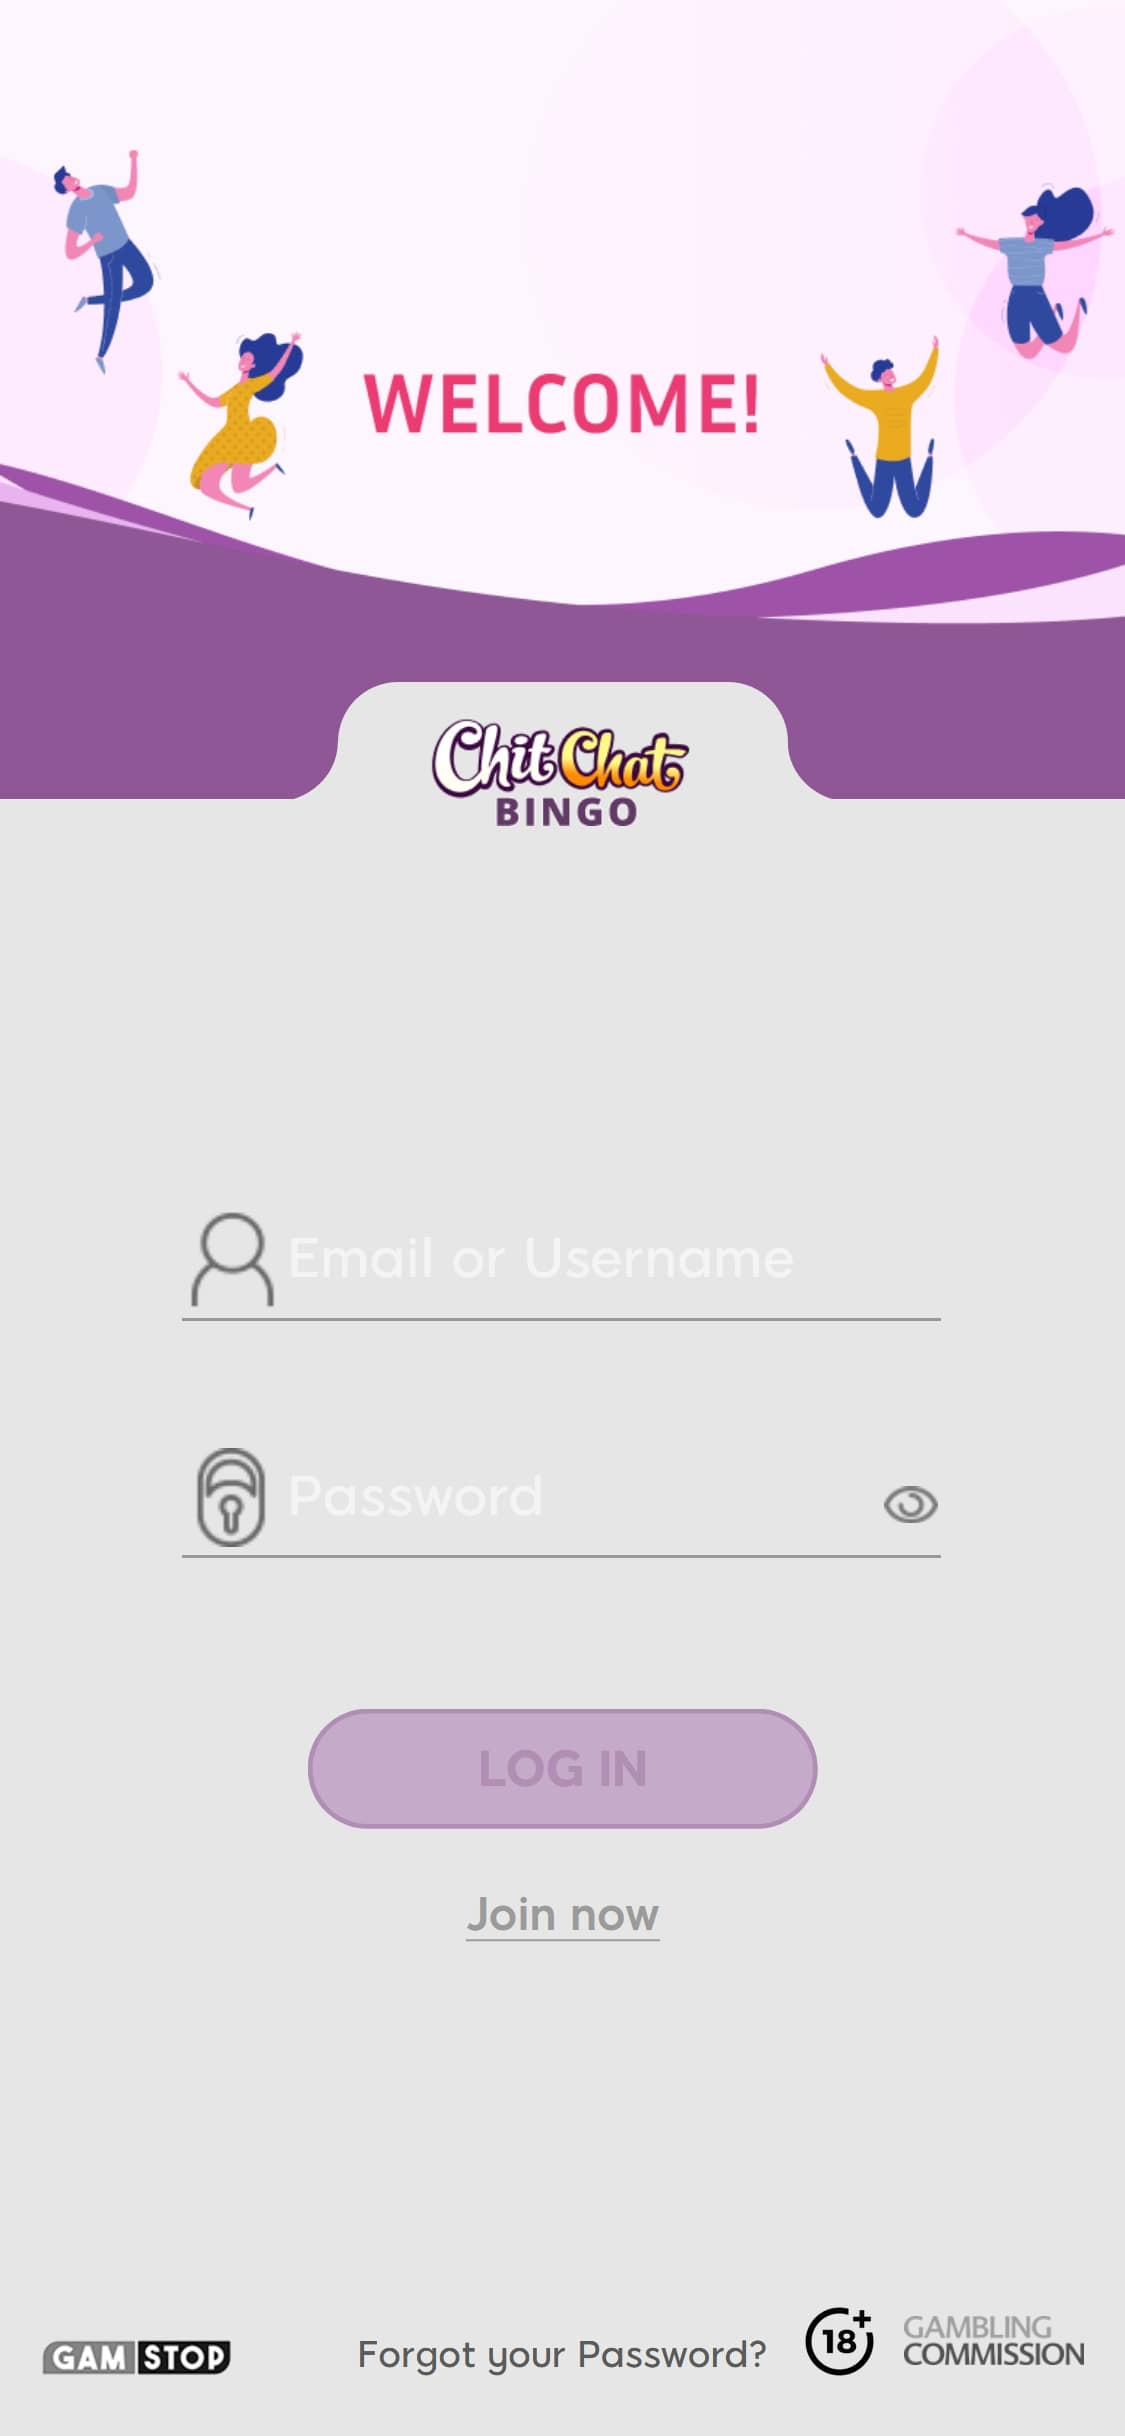 ChitChat Bingo Casino Mobile Login Review